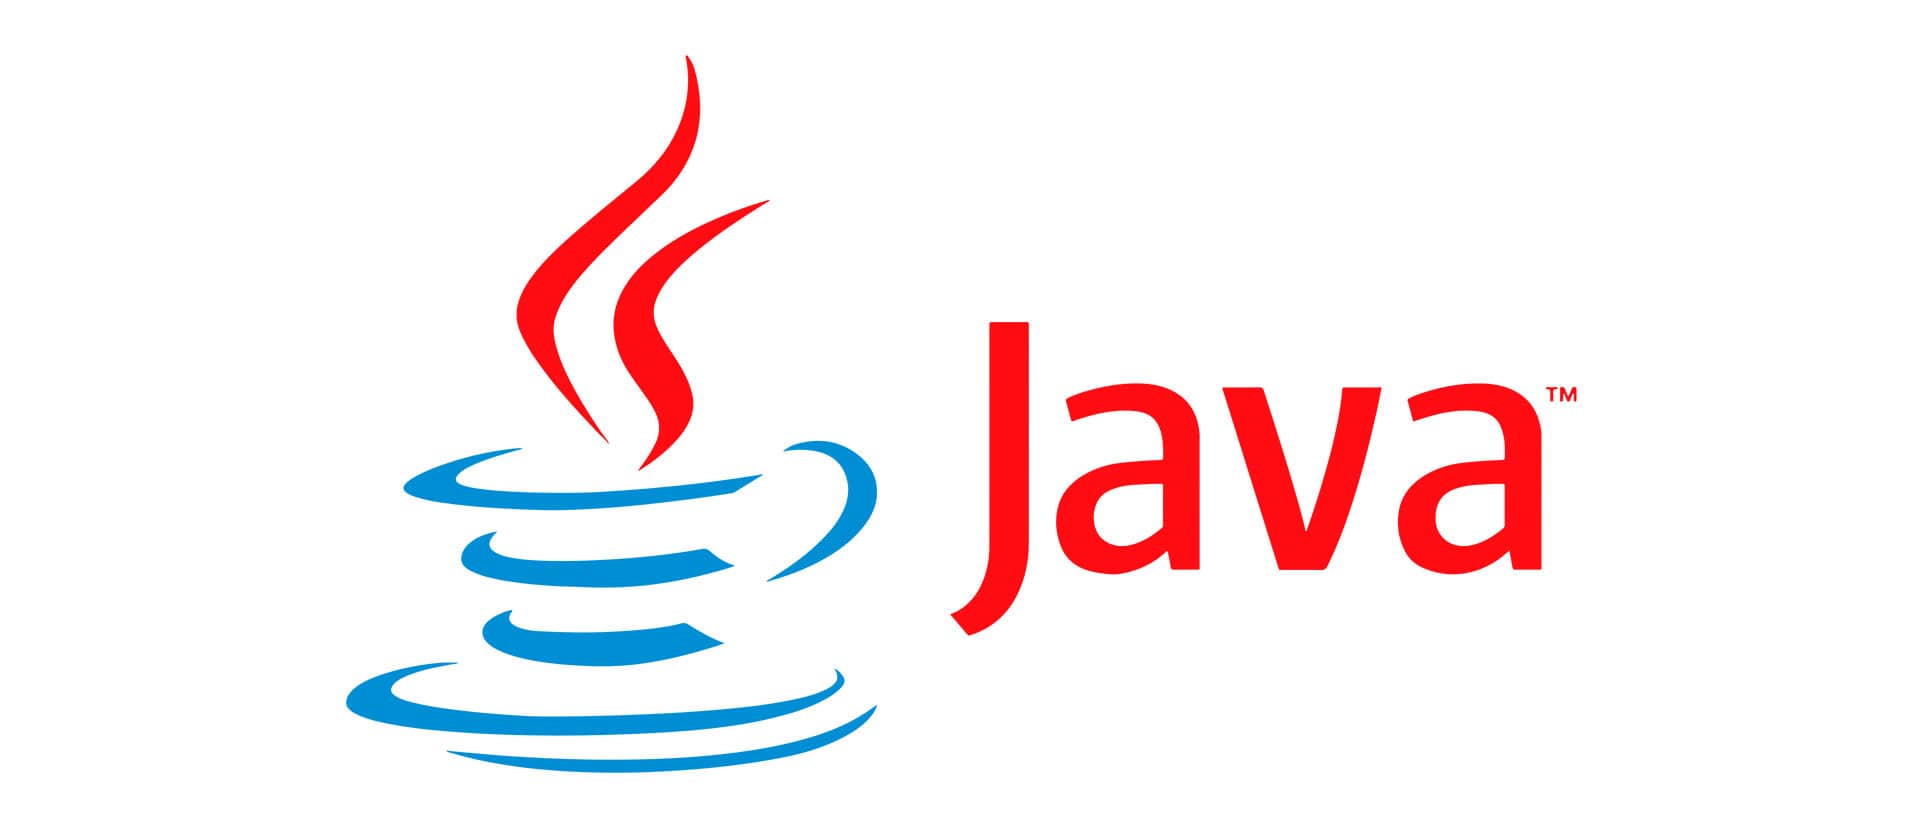 Java под. Java язык программирования logo. Jvaязык программирования логотип. Джава язык программирования логотип. Жавалоготип язык программирования.